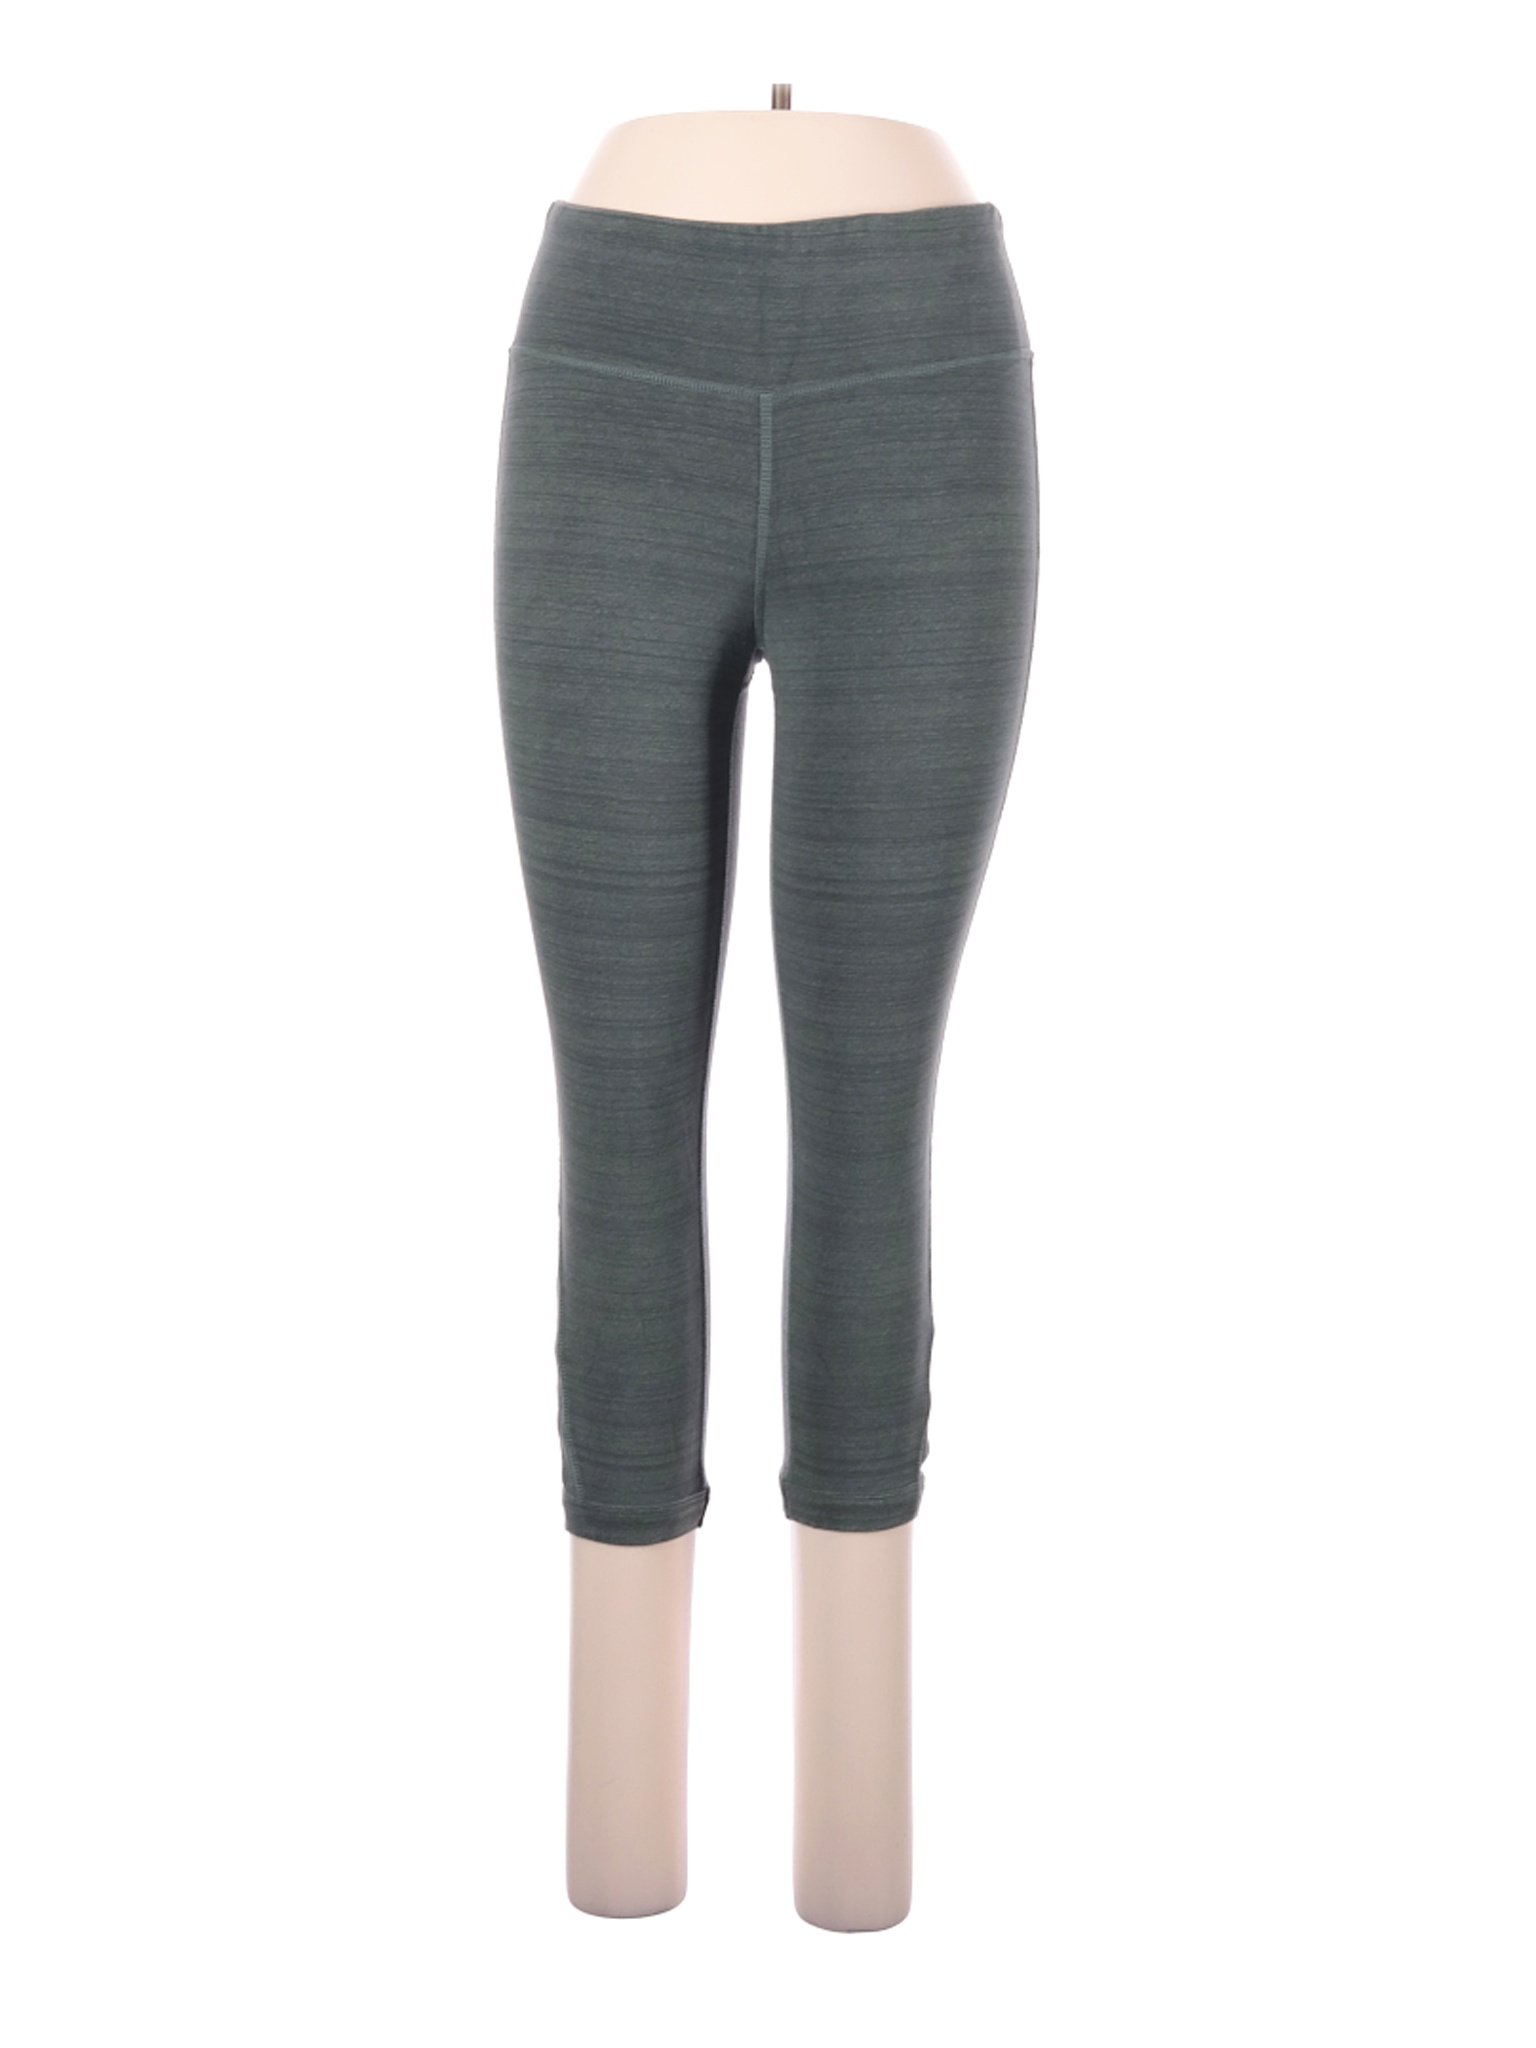 Xersion Women Gray Active Pants M | eBay